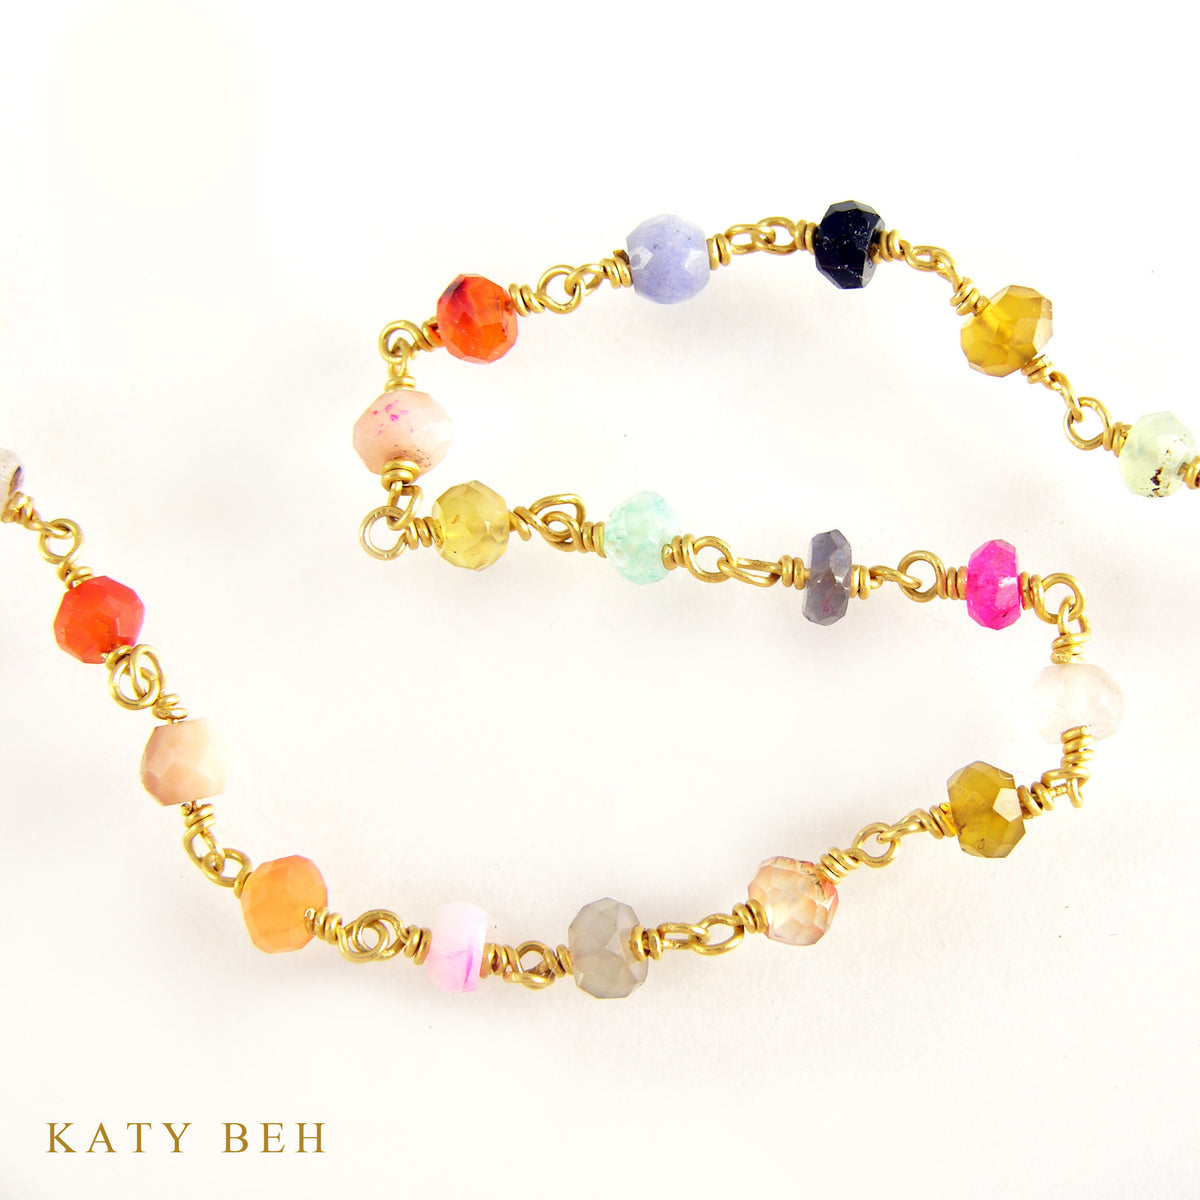 Mixed Semi Precious Gem Chain Necklace Katy Beh Jewelry